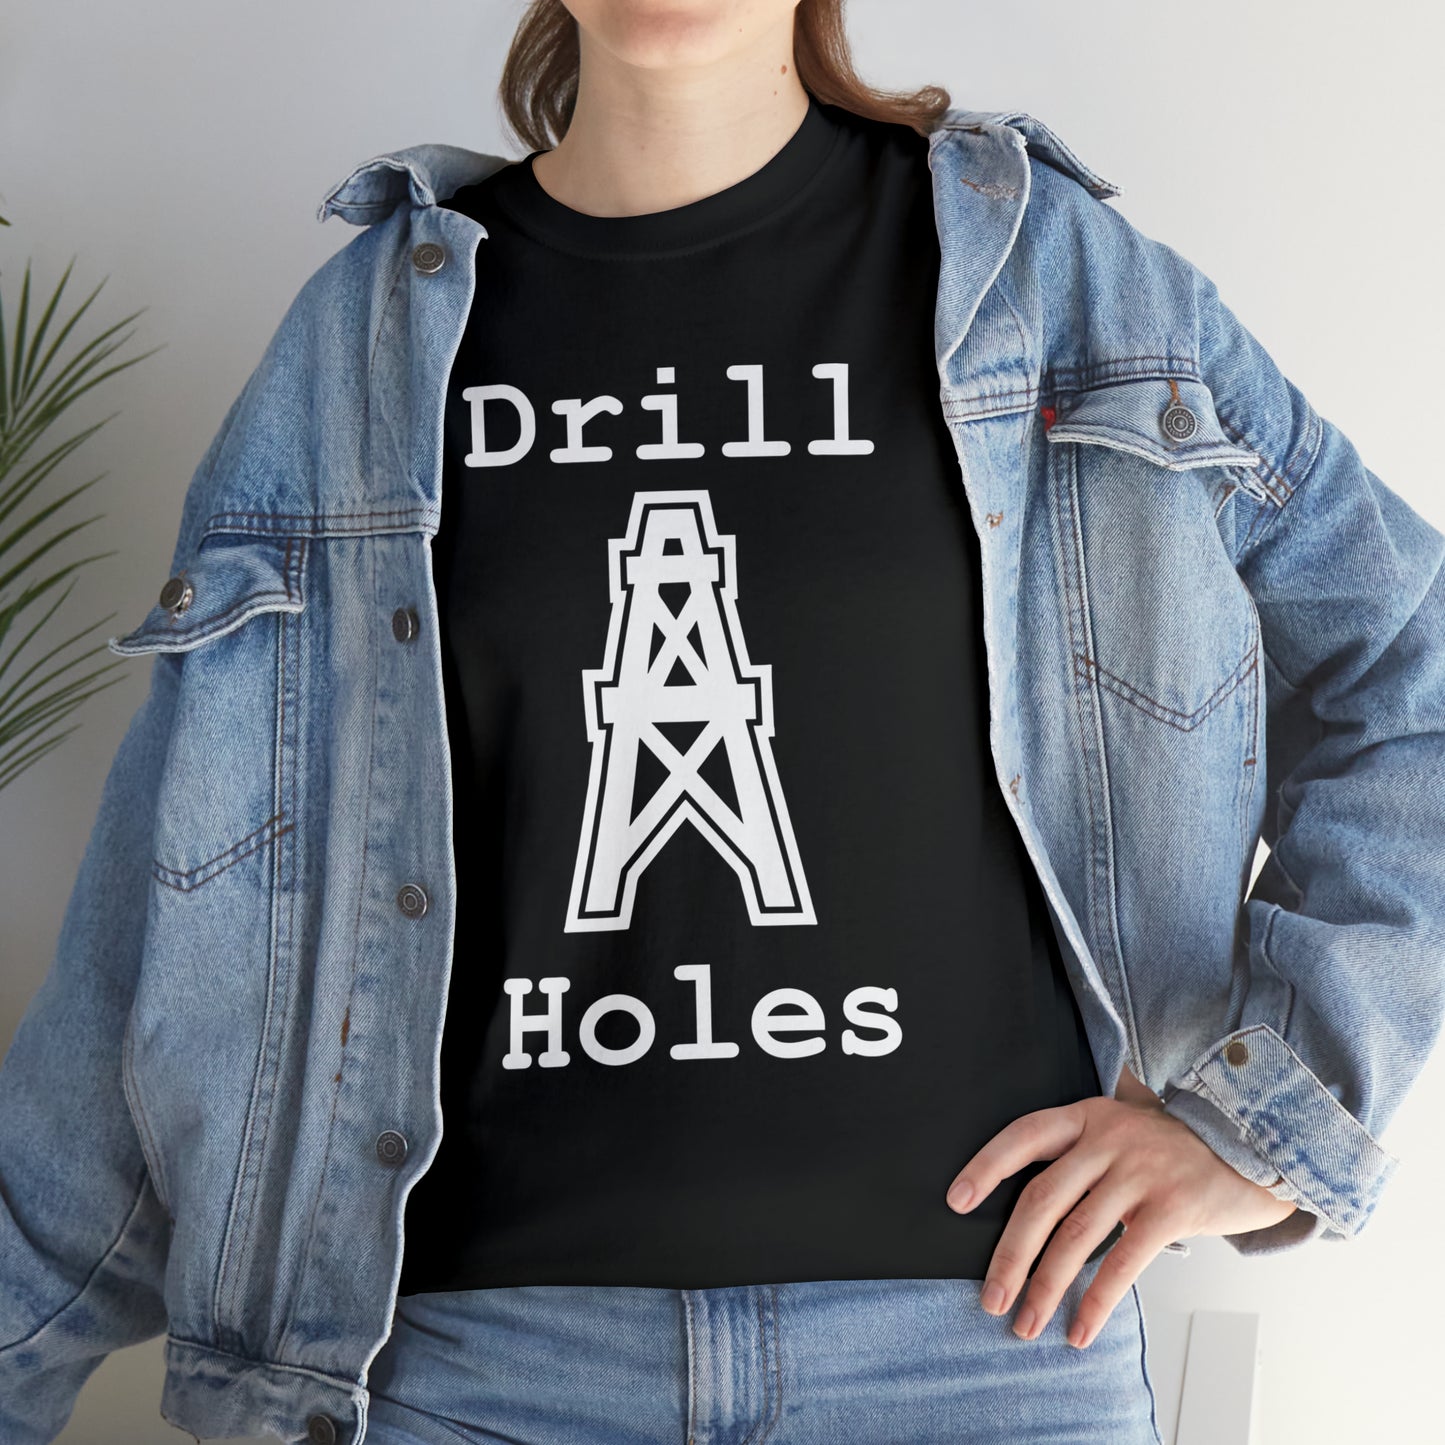 Drill Holes Black Shirt - Hurts Shirts Collection